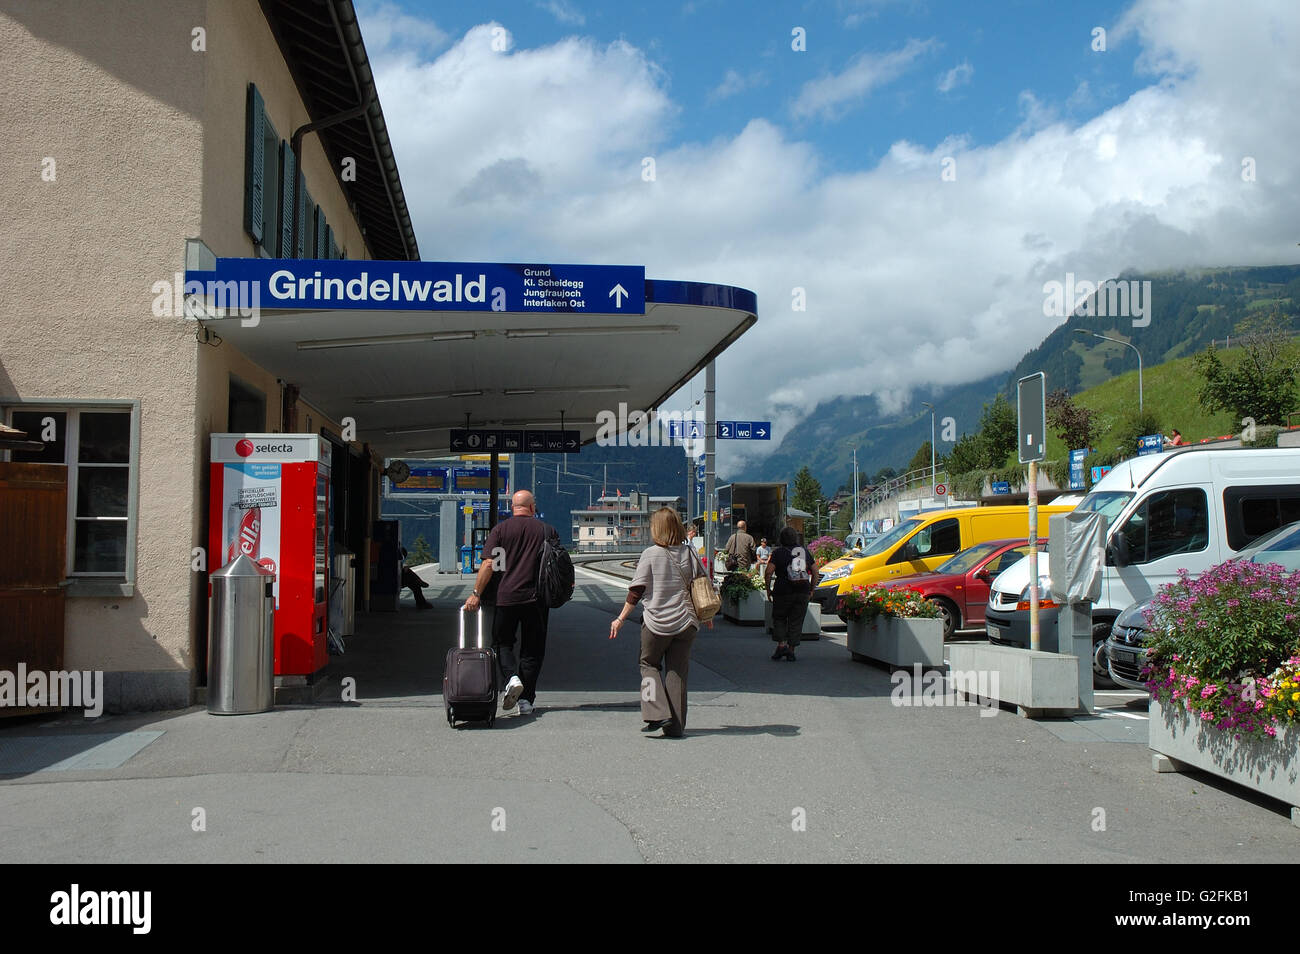 Grindelwald, Switzerland - August 19, 2014: Unidentified people walking at railway station in Grindelwald in Alps in Switzerland Stock Photo